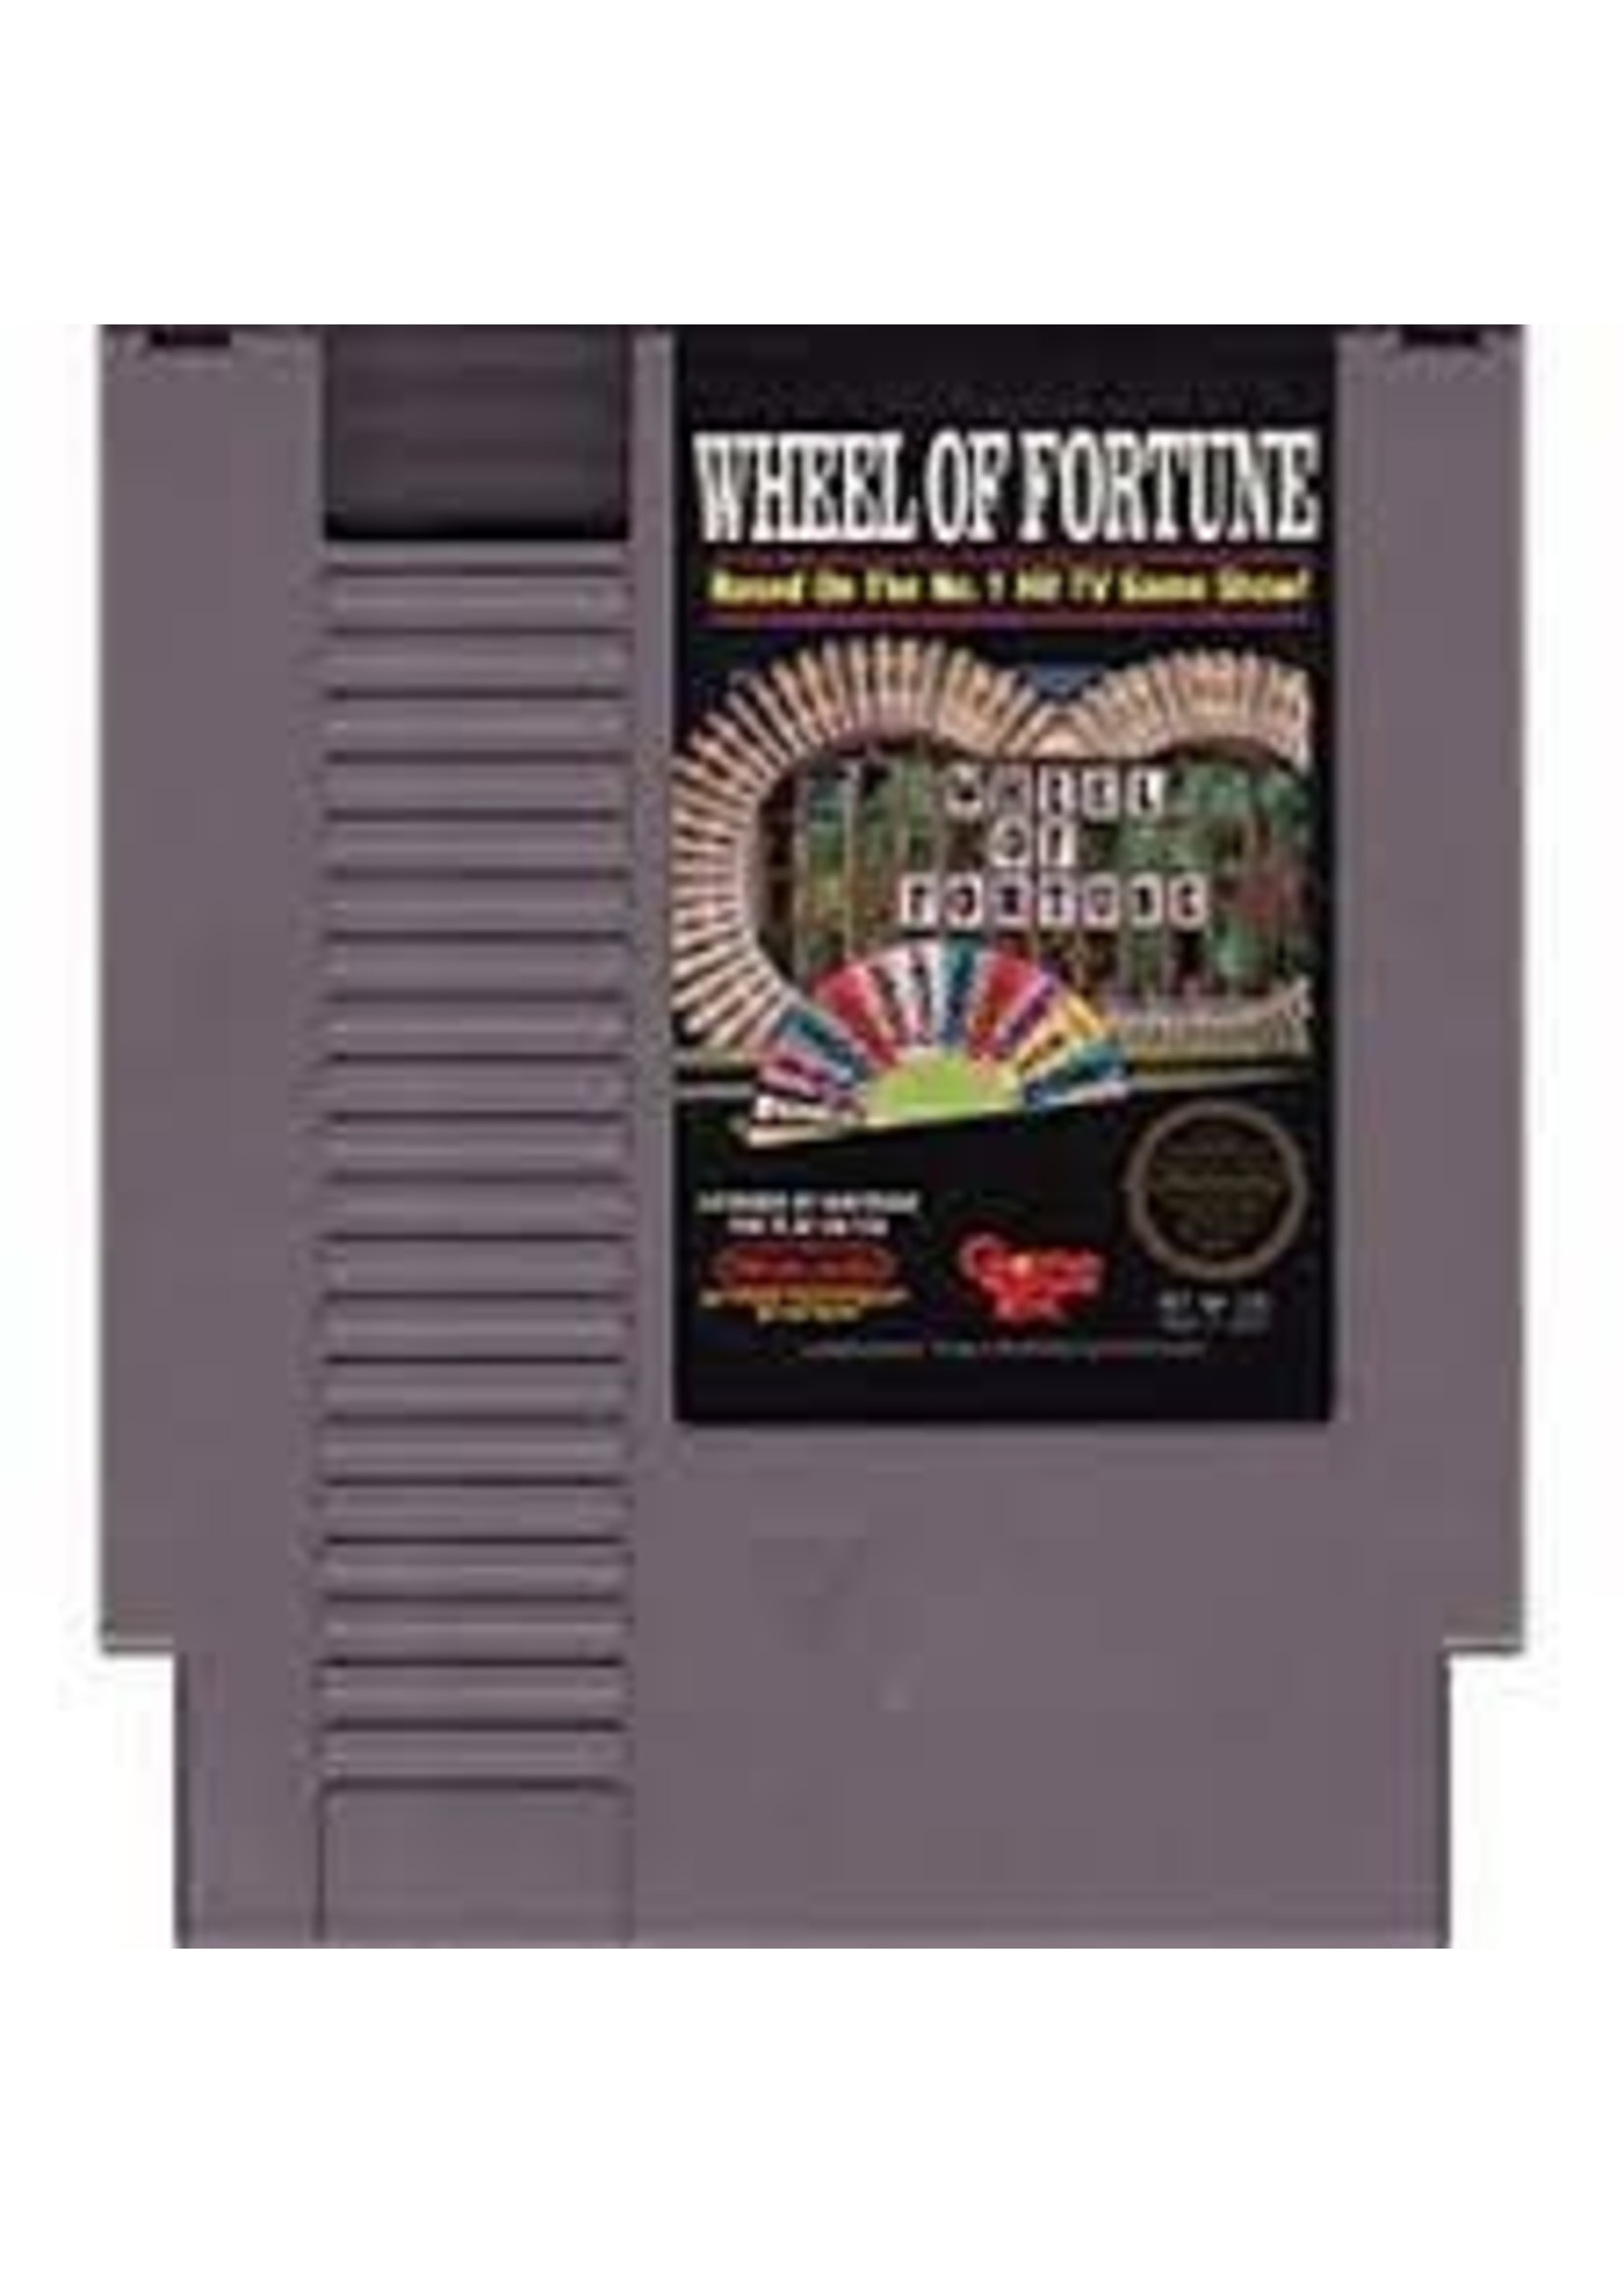 Nintendo (NES) Wheel of Fortune